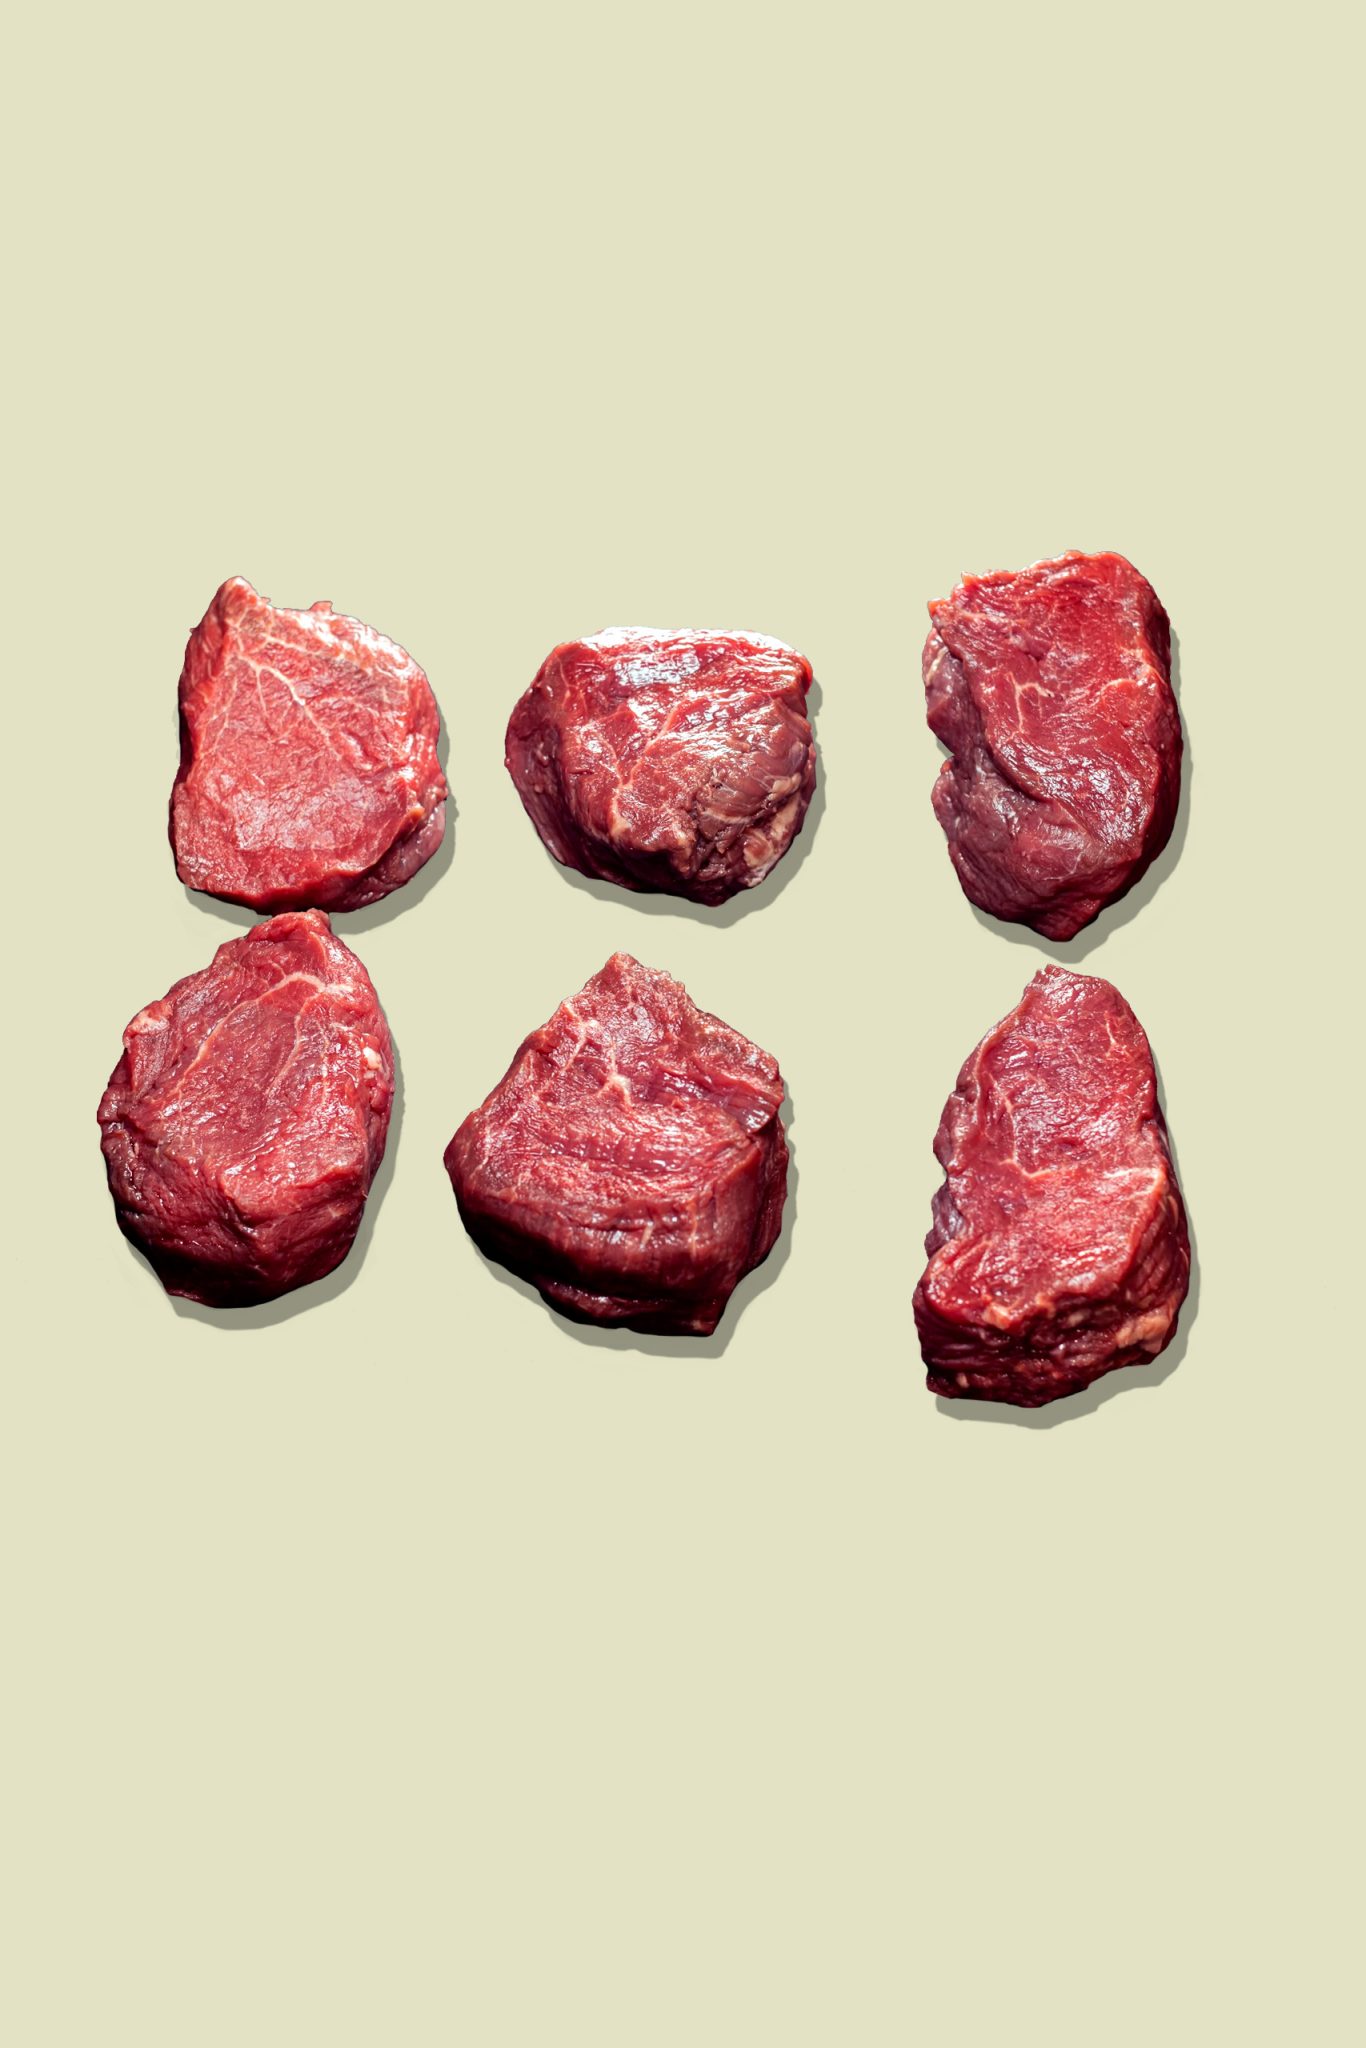 Steak for home - Probierpaket Filet